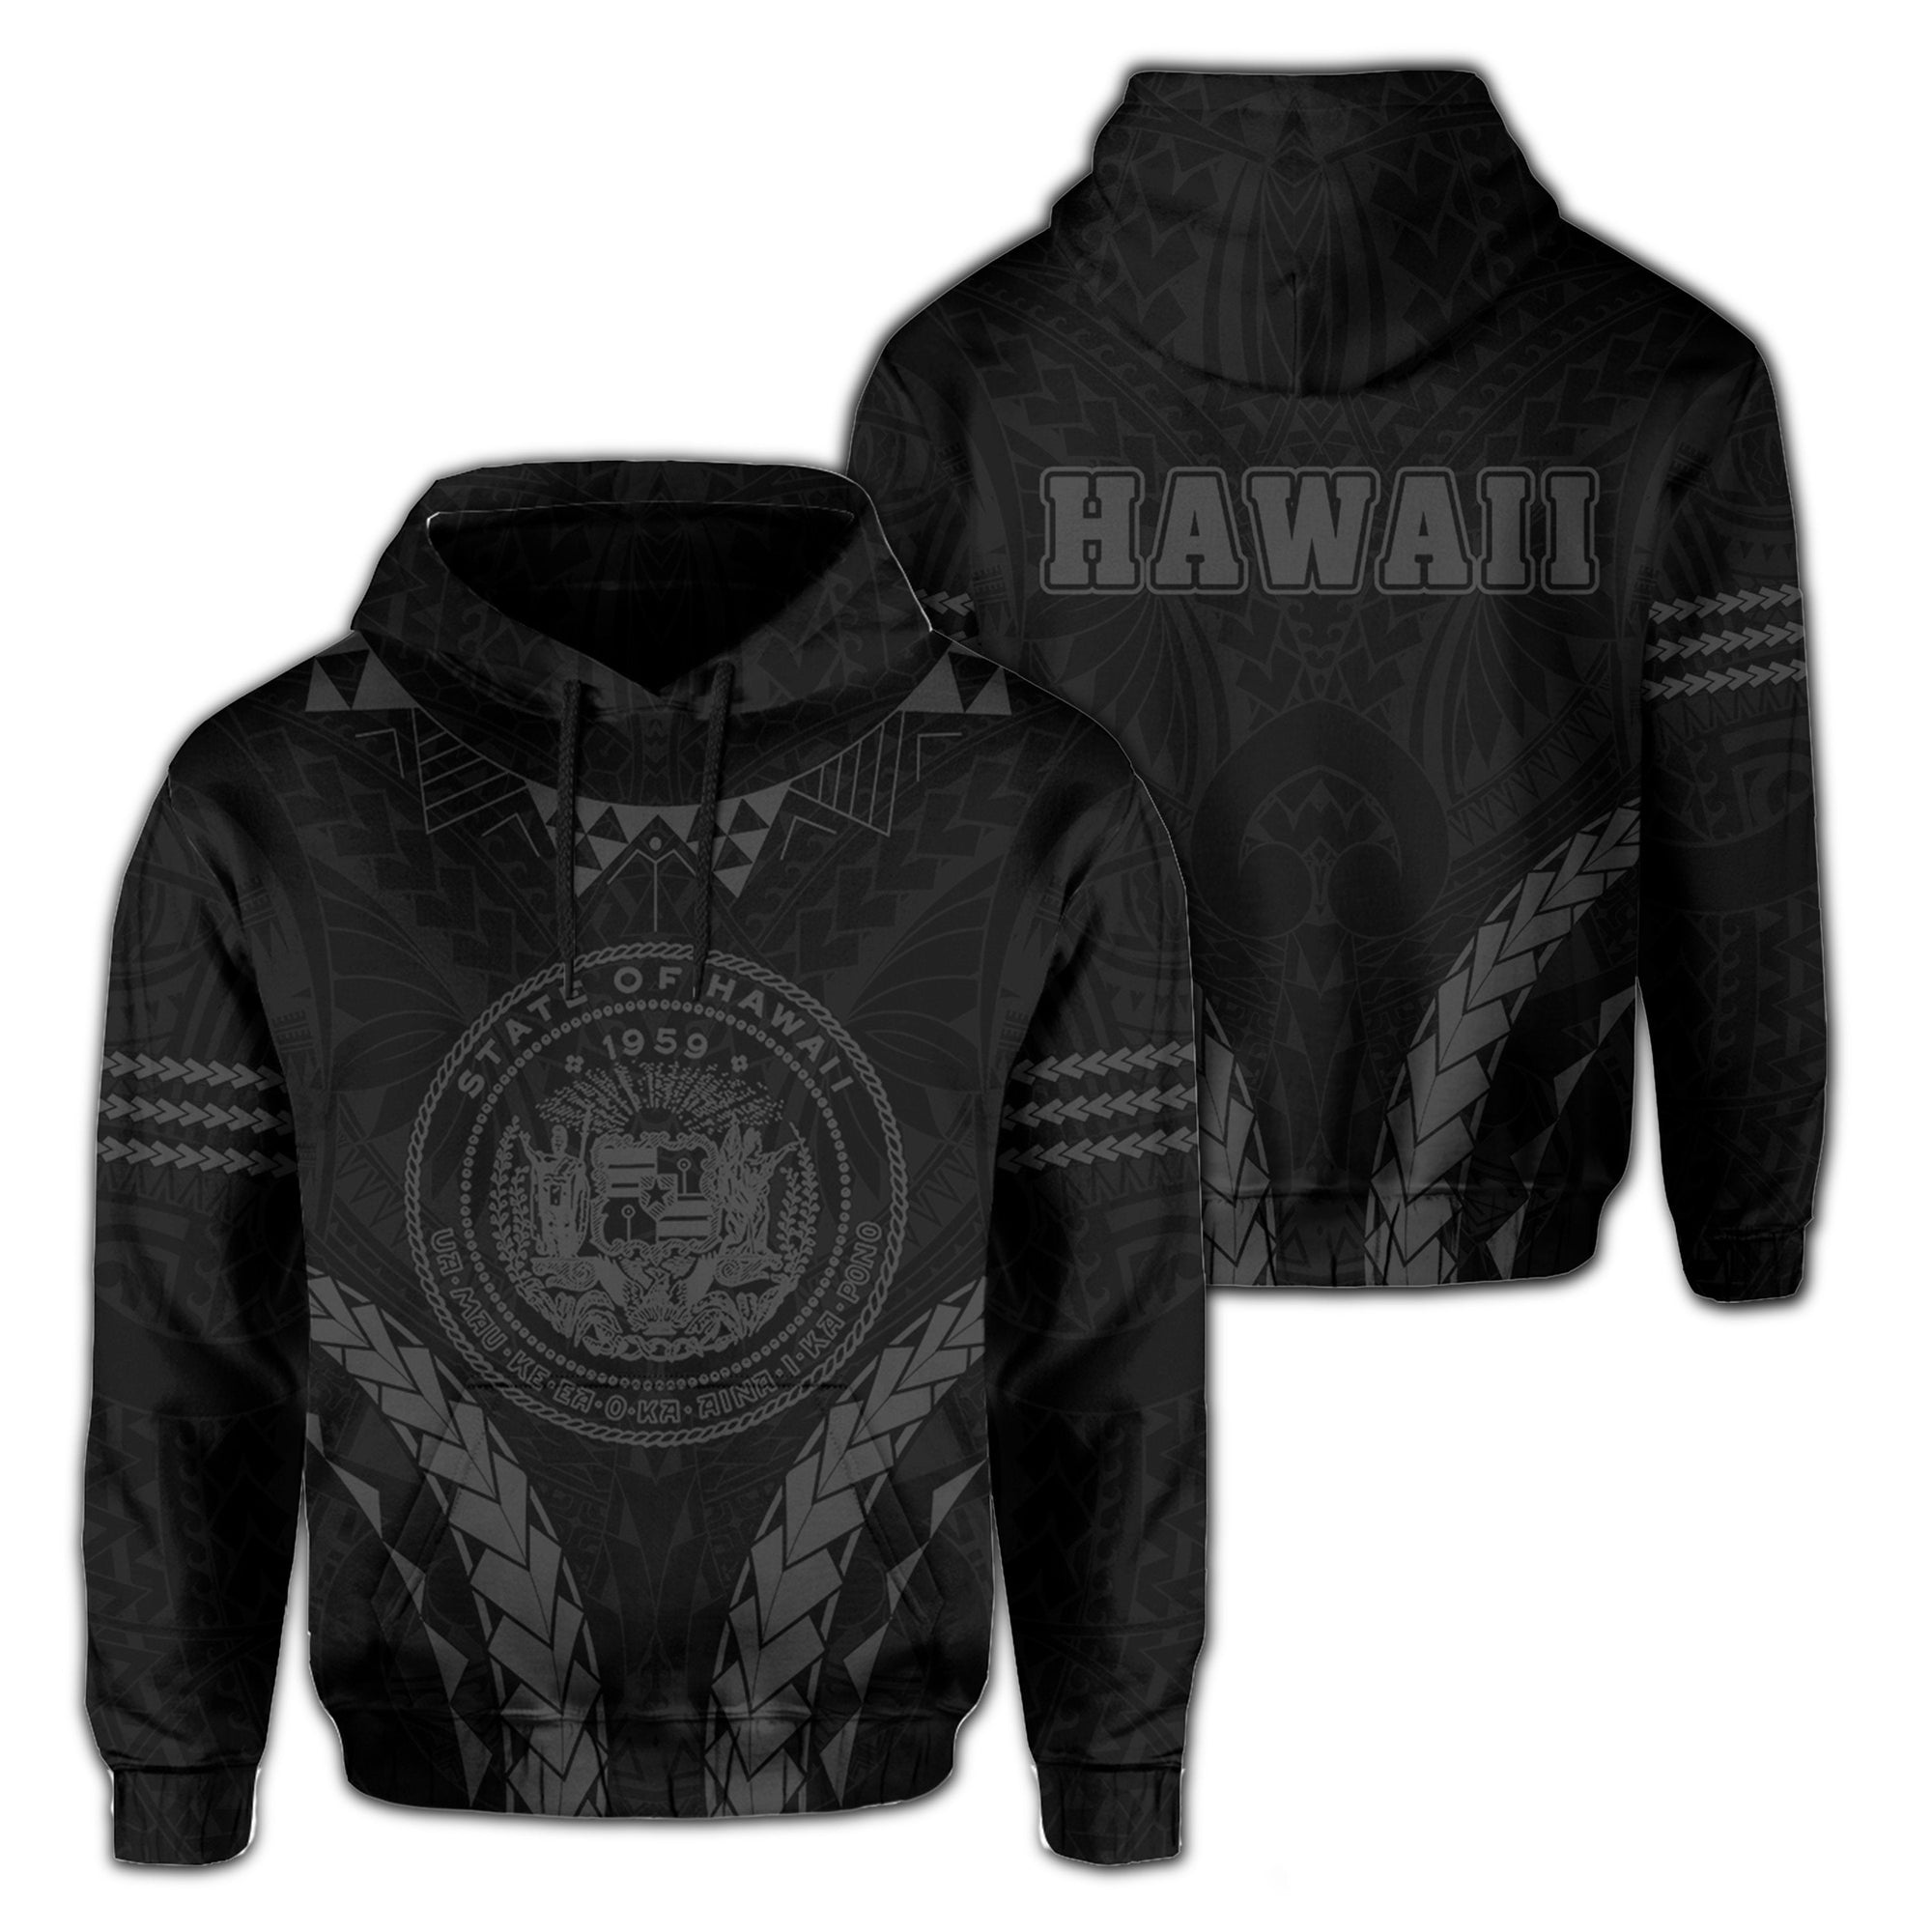 polynesian-kakau-seal-of-hawaii-hoodie-sport-style-version-20-gray